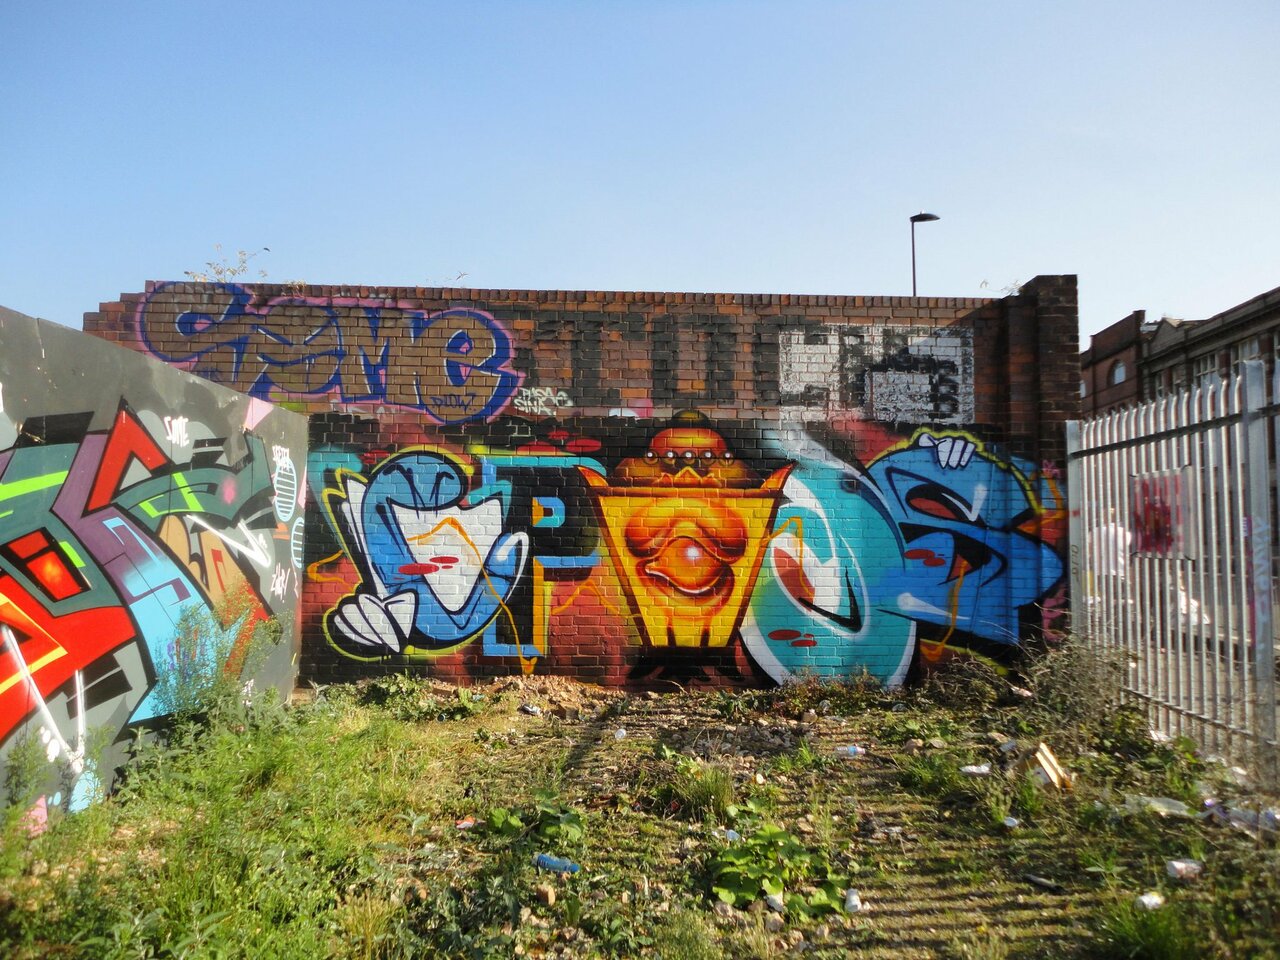 Fresh style from Epik

#graffiti #graff #Digbeth #art #arte #mural #writing #streetart #Birmingham http://t.co/37KSOjr9cT